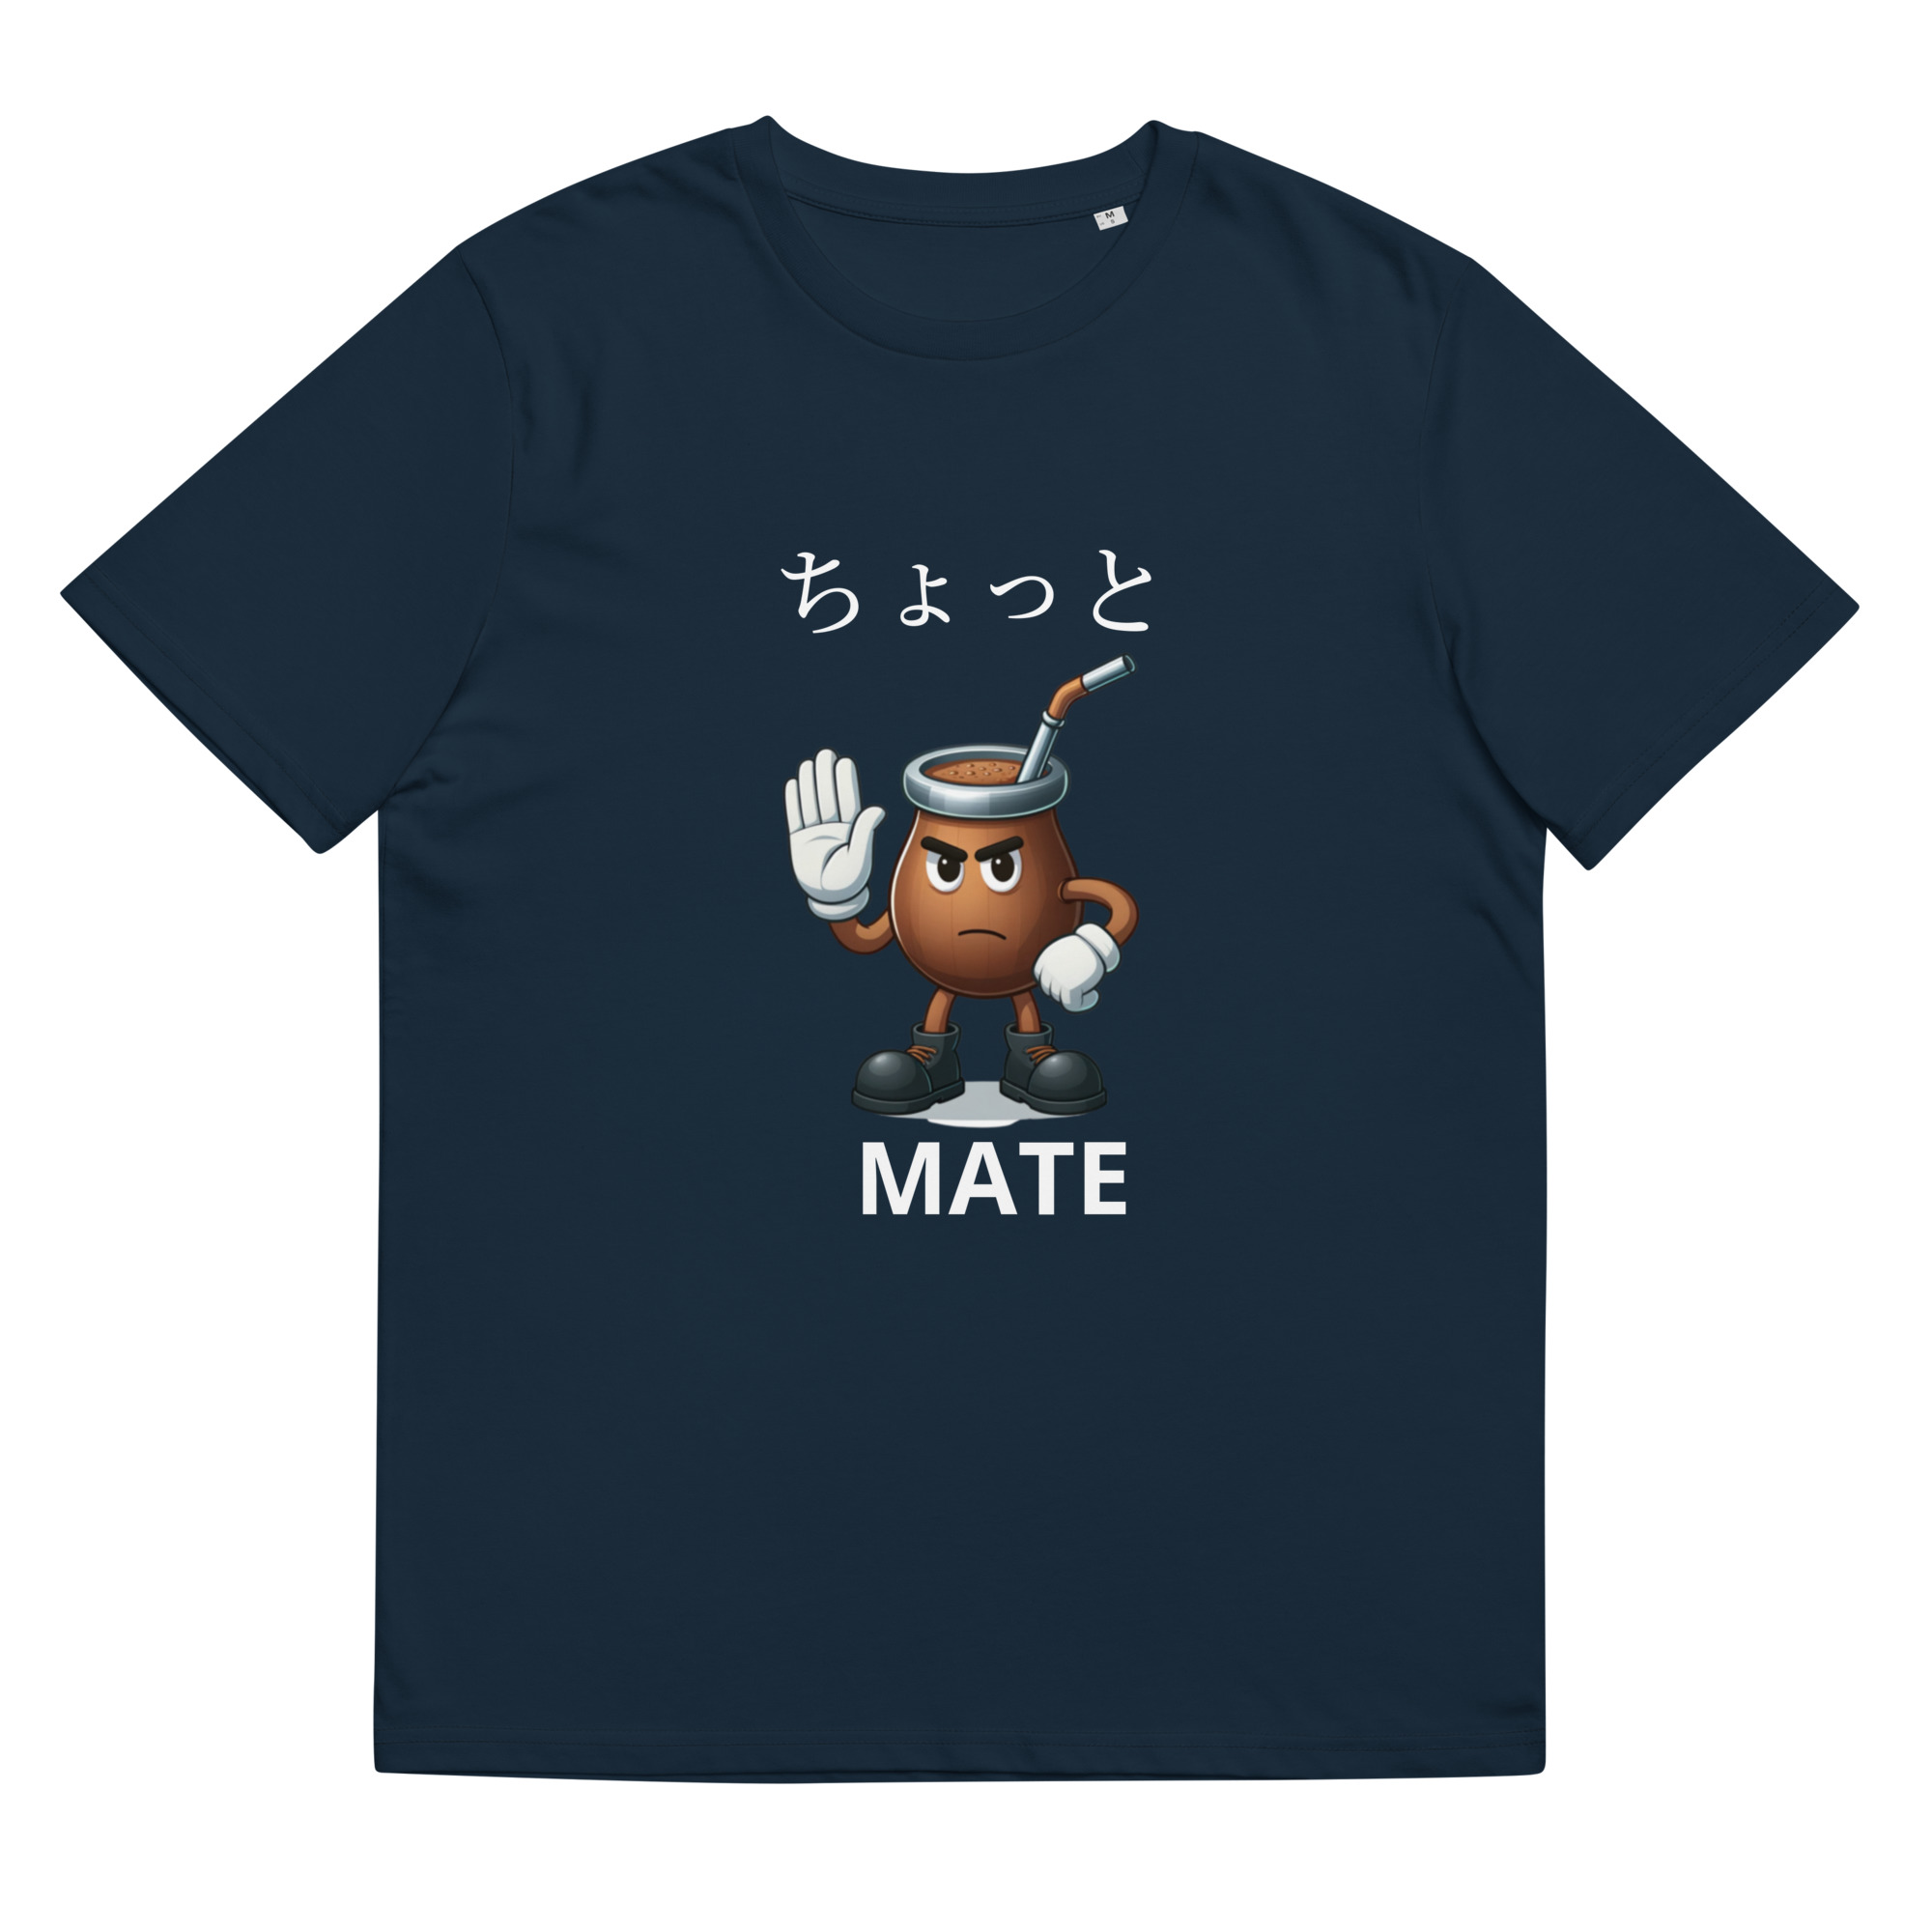 Mate – Camiseta de algodón orgánico unisex